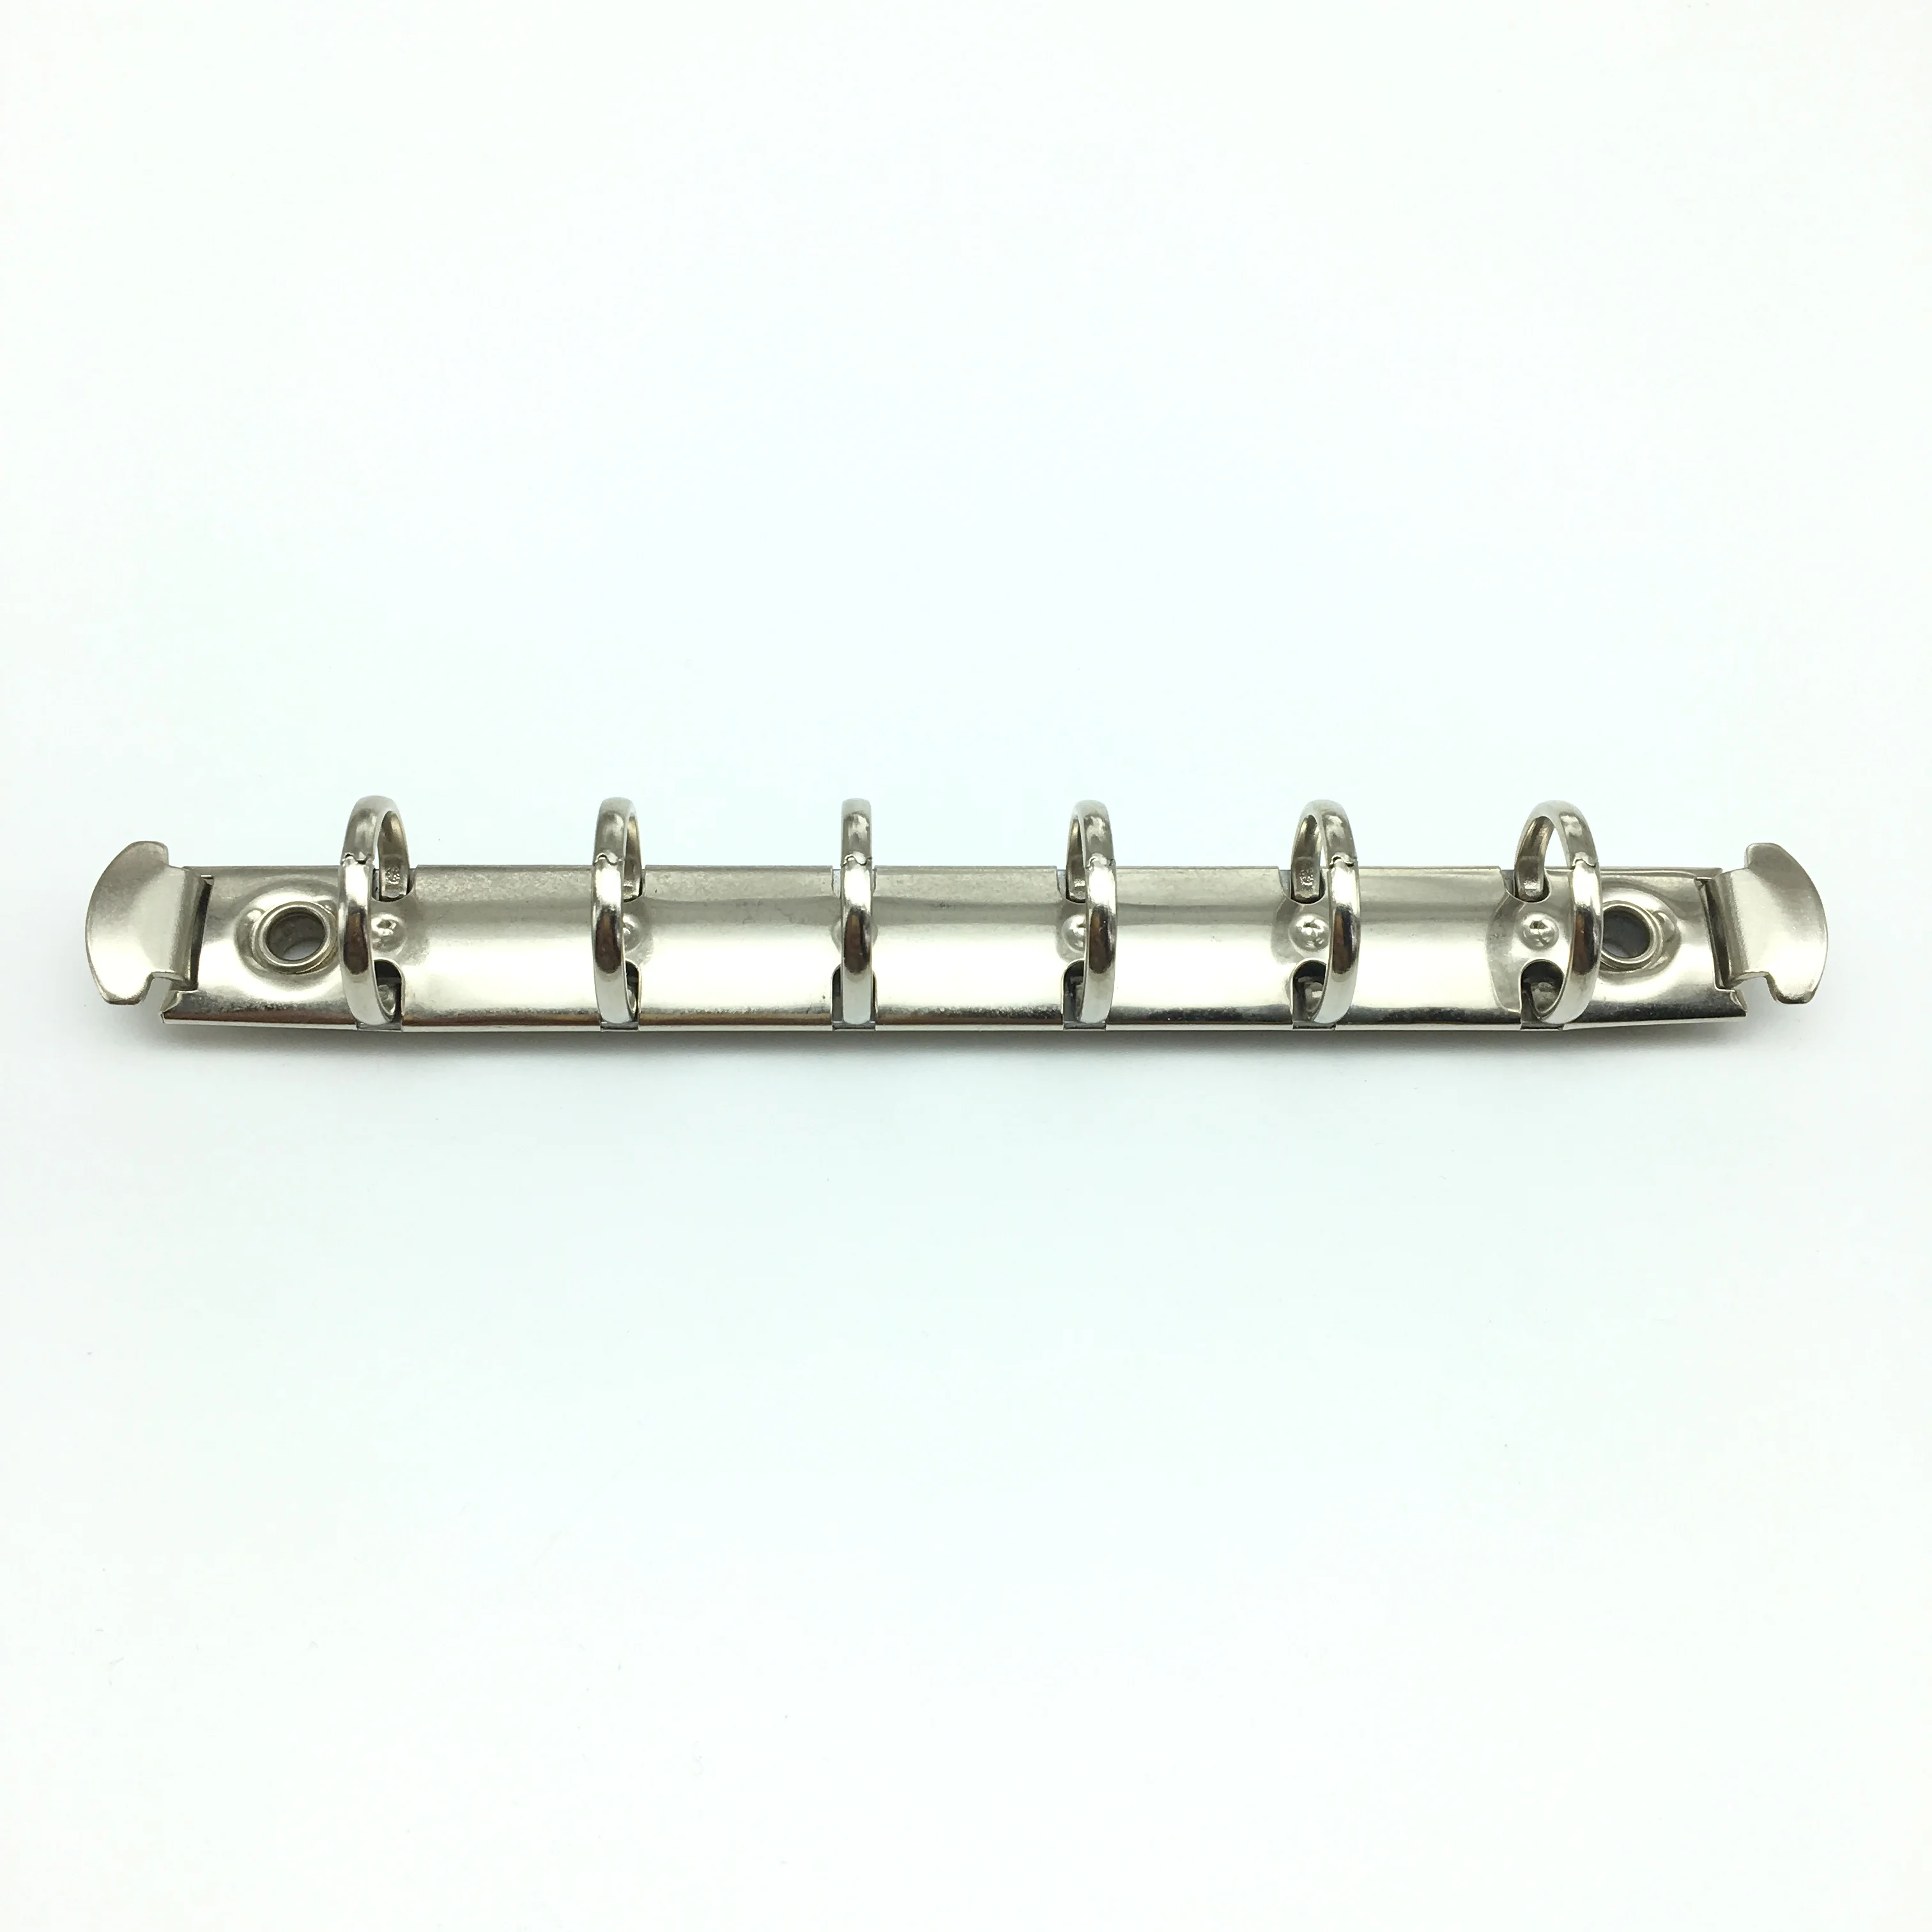 7Pcs scrapbook binder mechanism Metal Binder Mechanism Replacement Kit A6 6- Ring | eBay